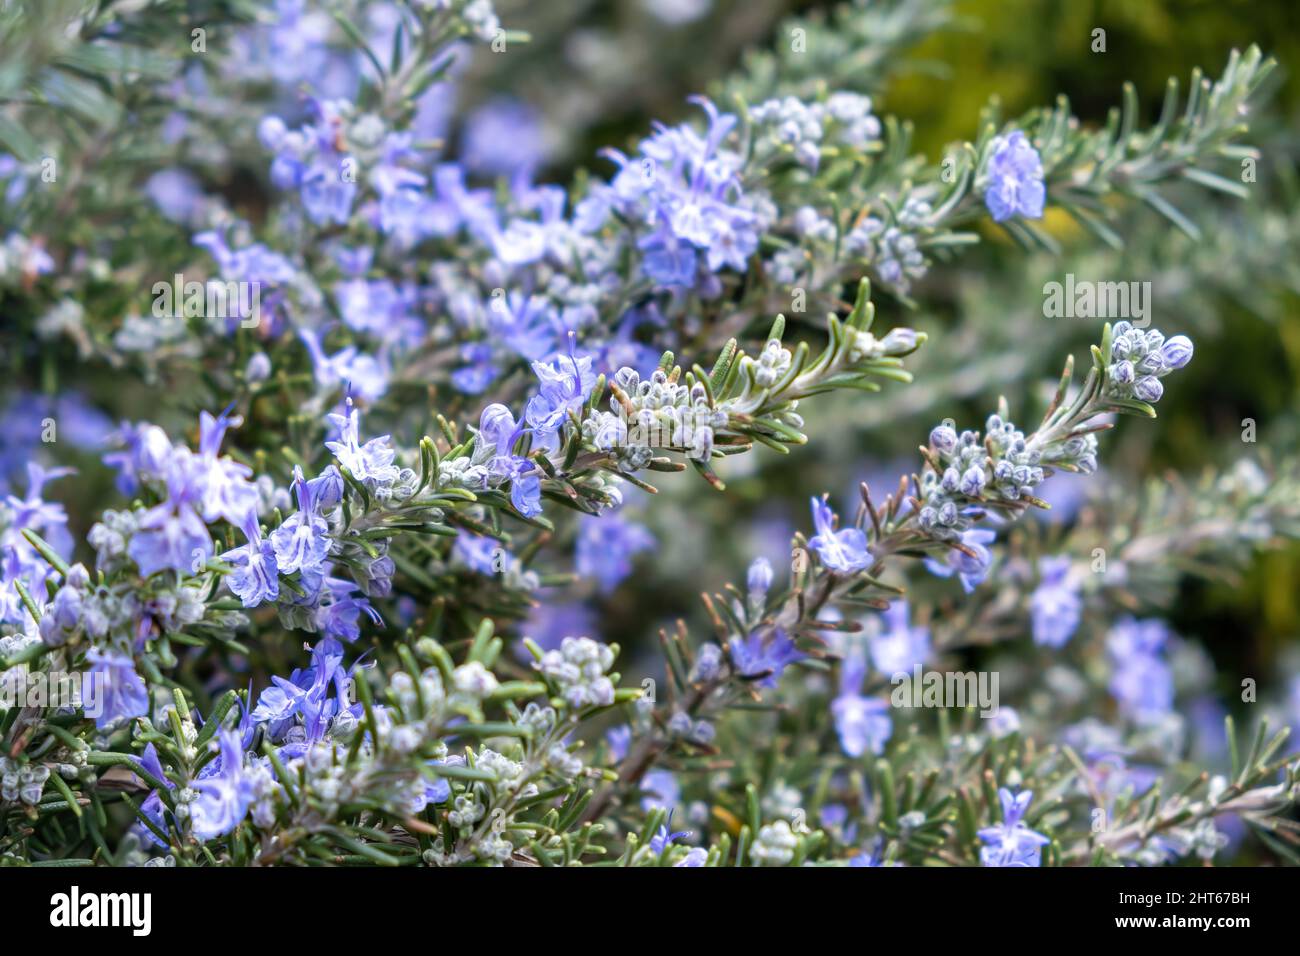 Rosemary blooming bush background. Fresh rosmarinus officinalis blue purple blossom plant close up view Stock Photo